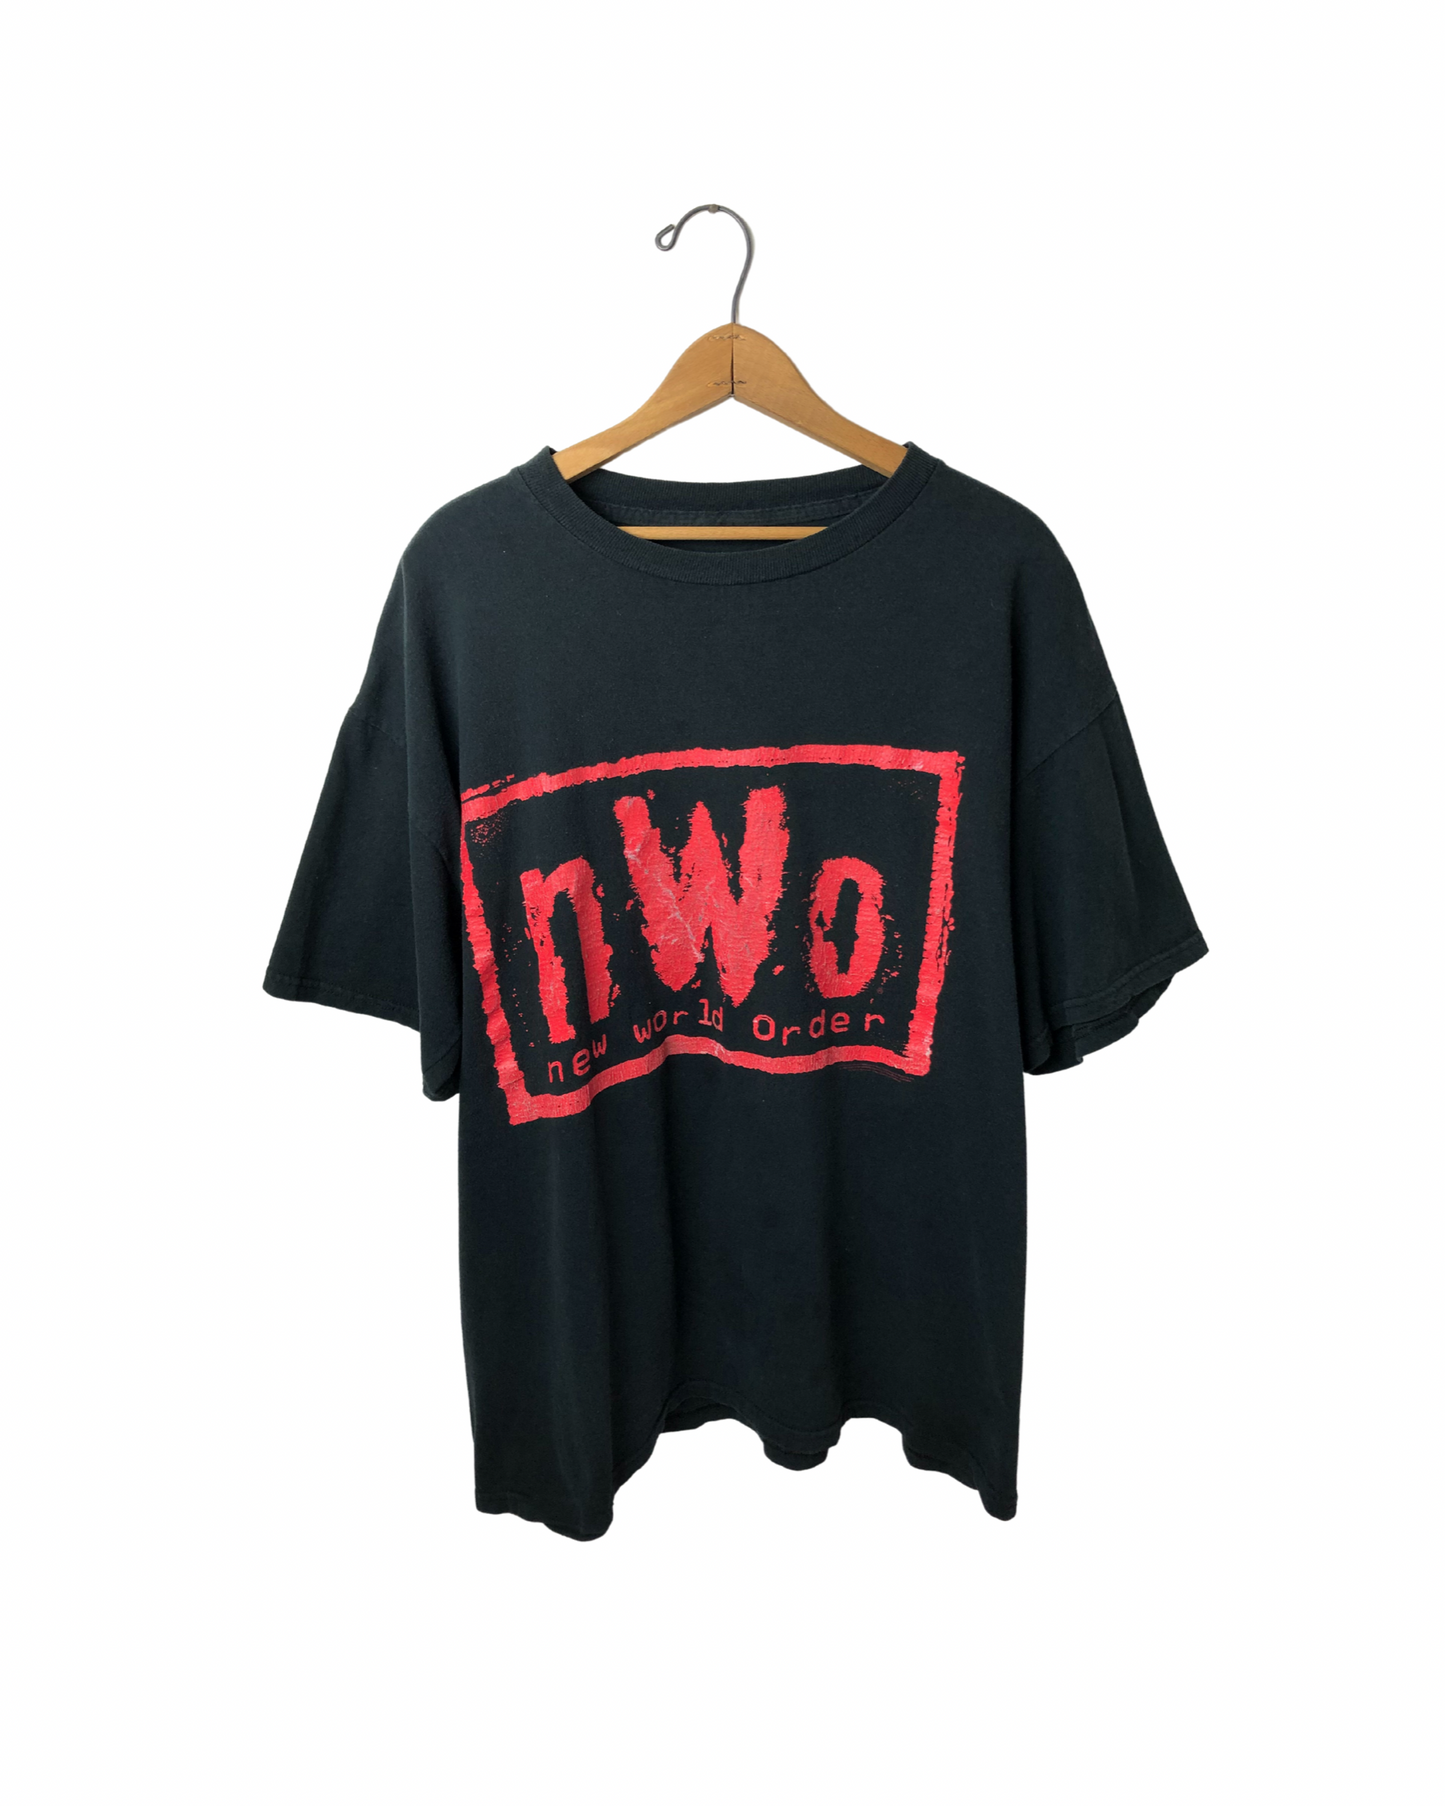 ‘98 New World Order WCW Wrestling T-Shirt Size X-Large